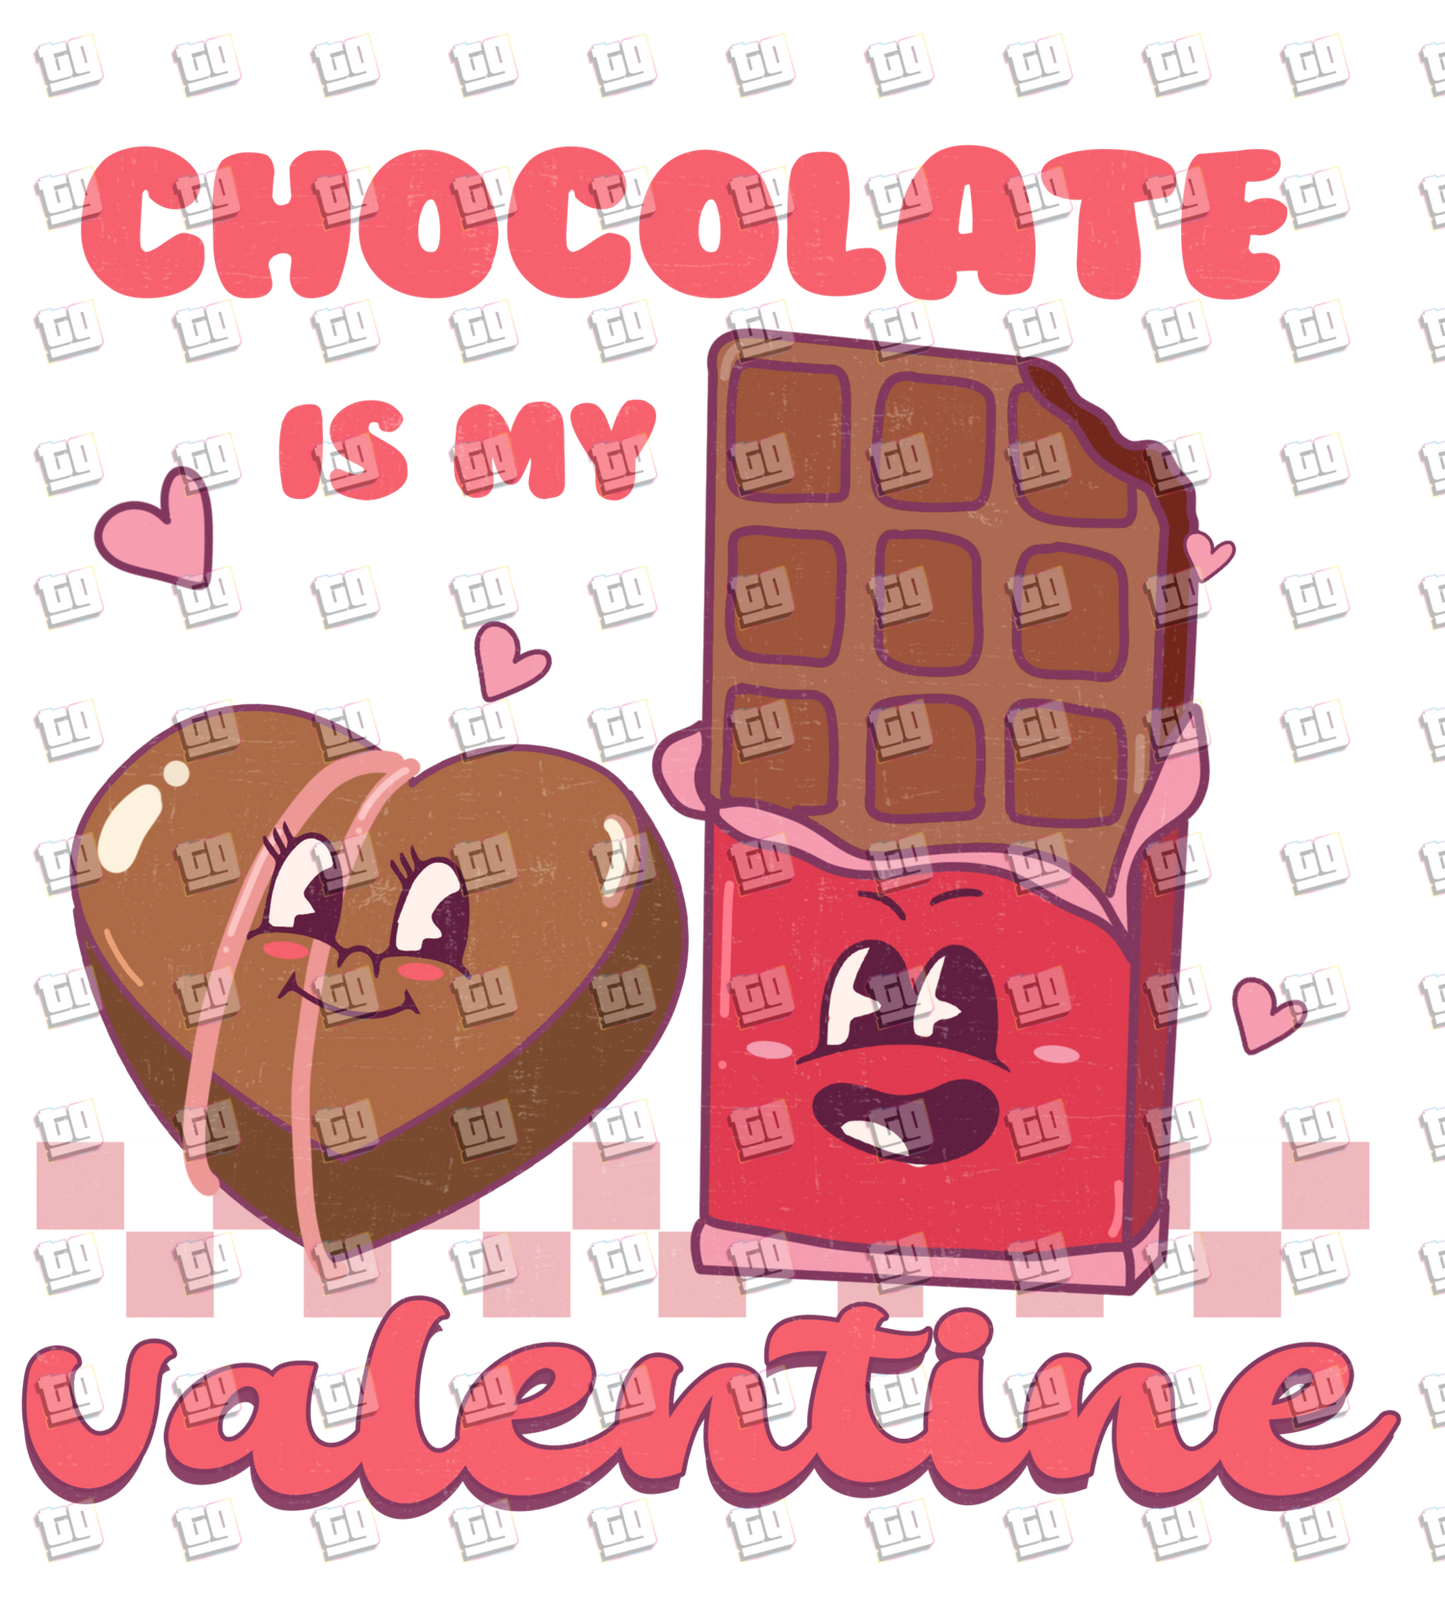 Chocolate Is My Valentine- Valentines - DTF Transfer